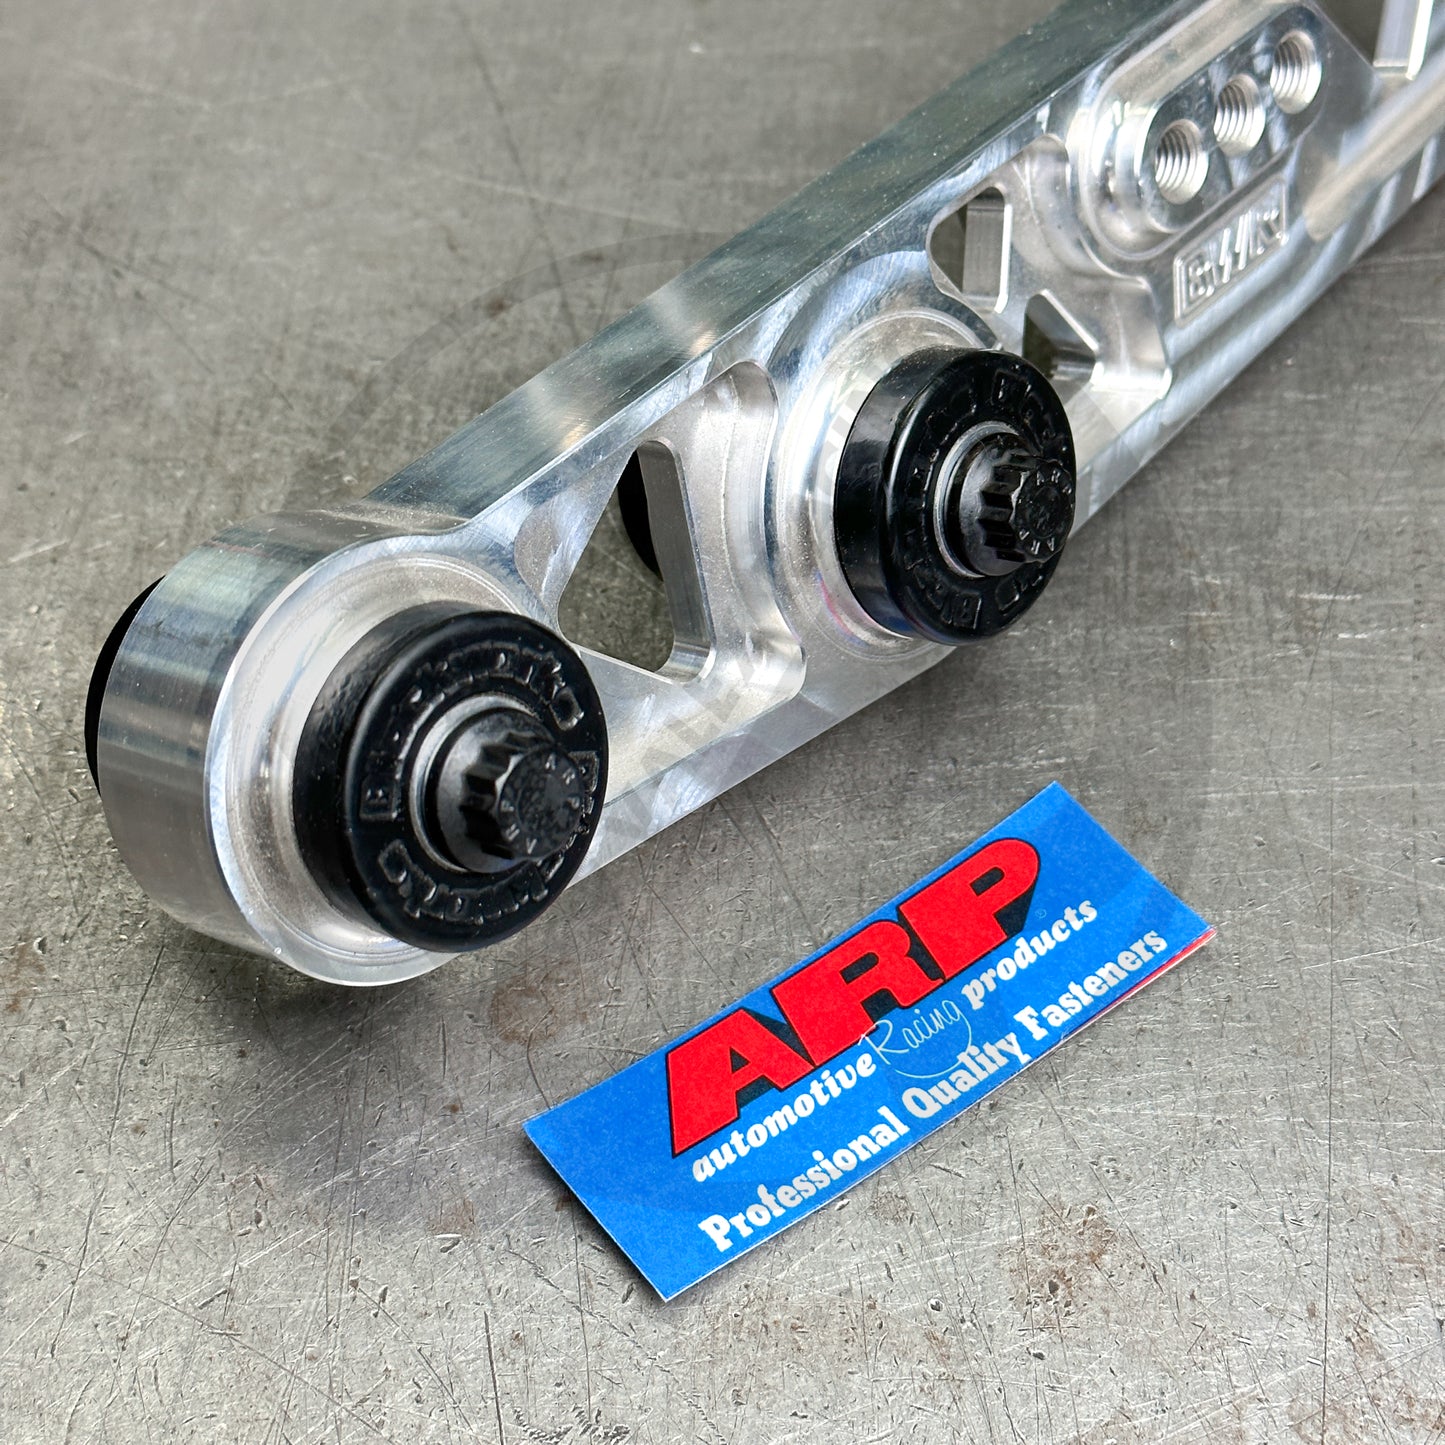 ARP Rear Lower Control Arm Bolt Kit for 90-01 Acura Integra